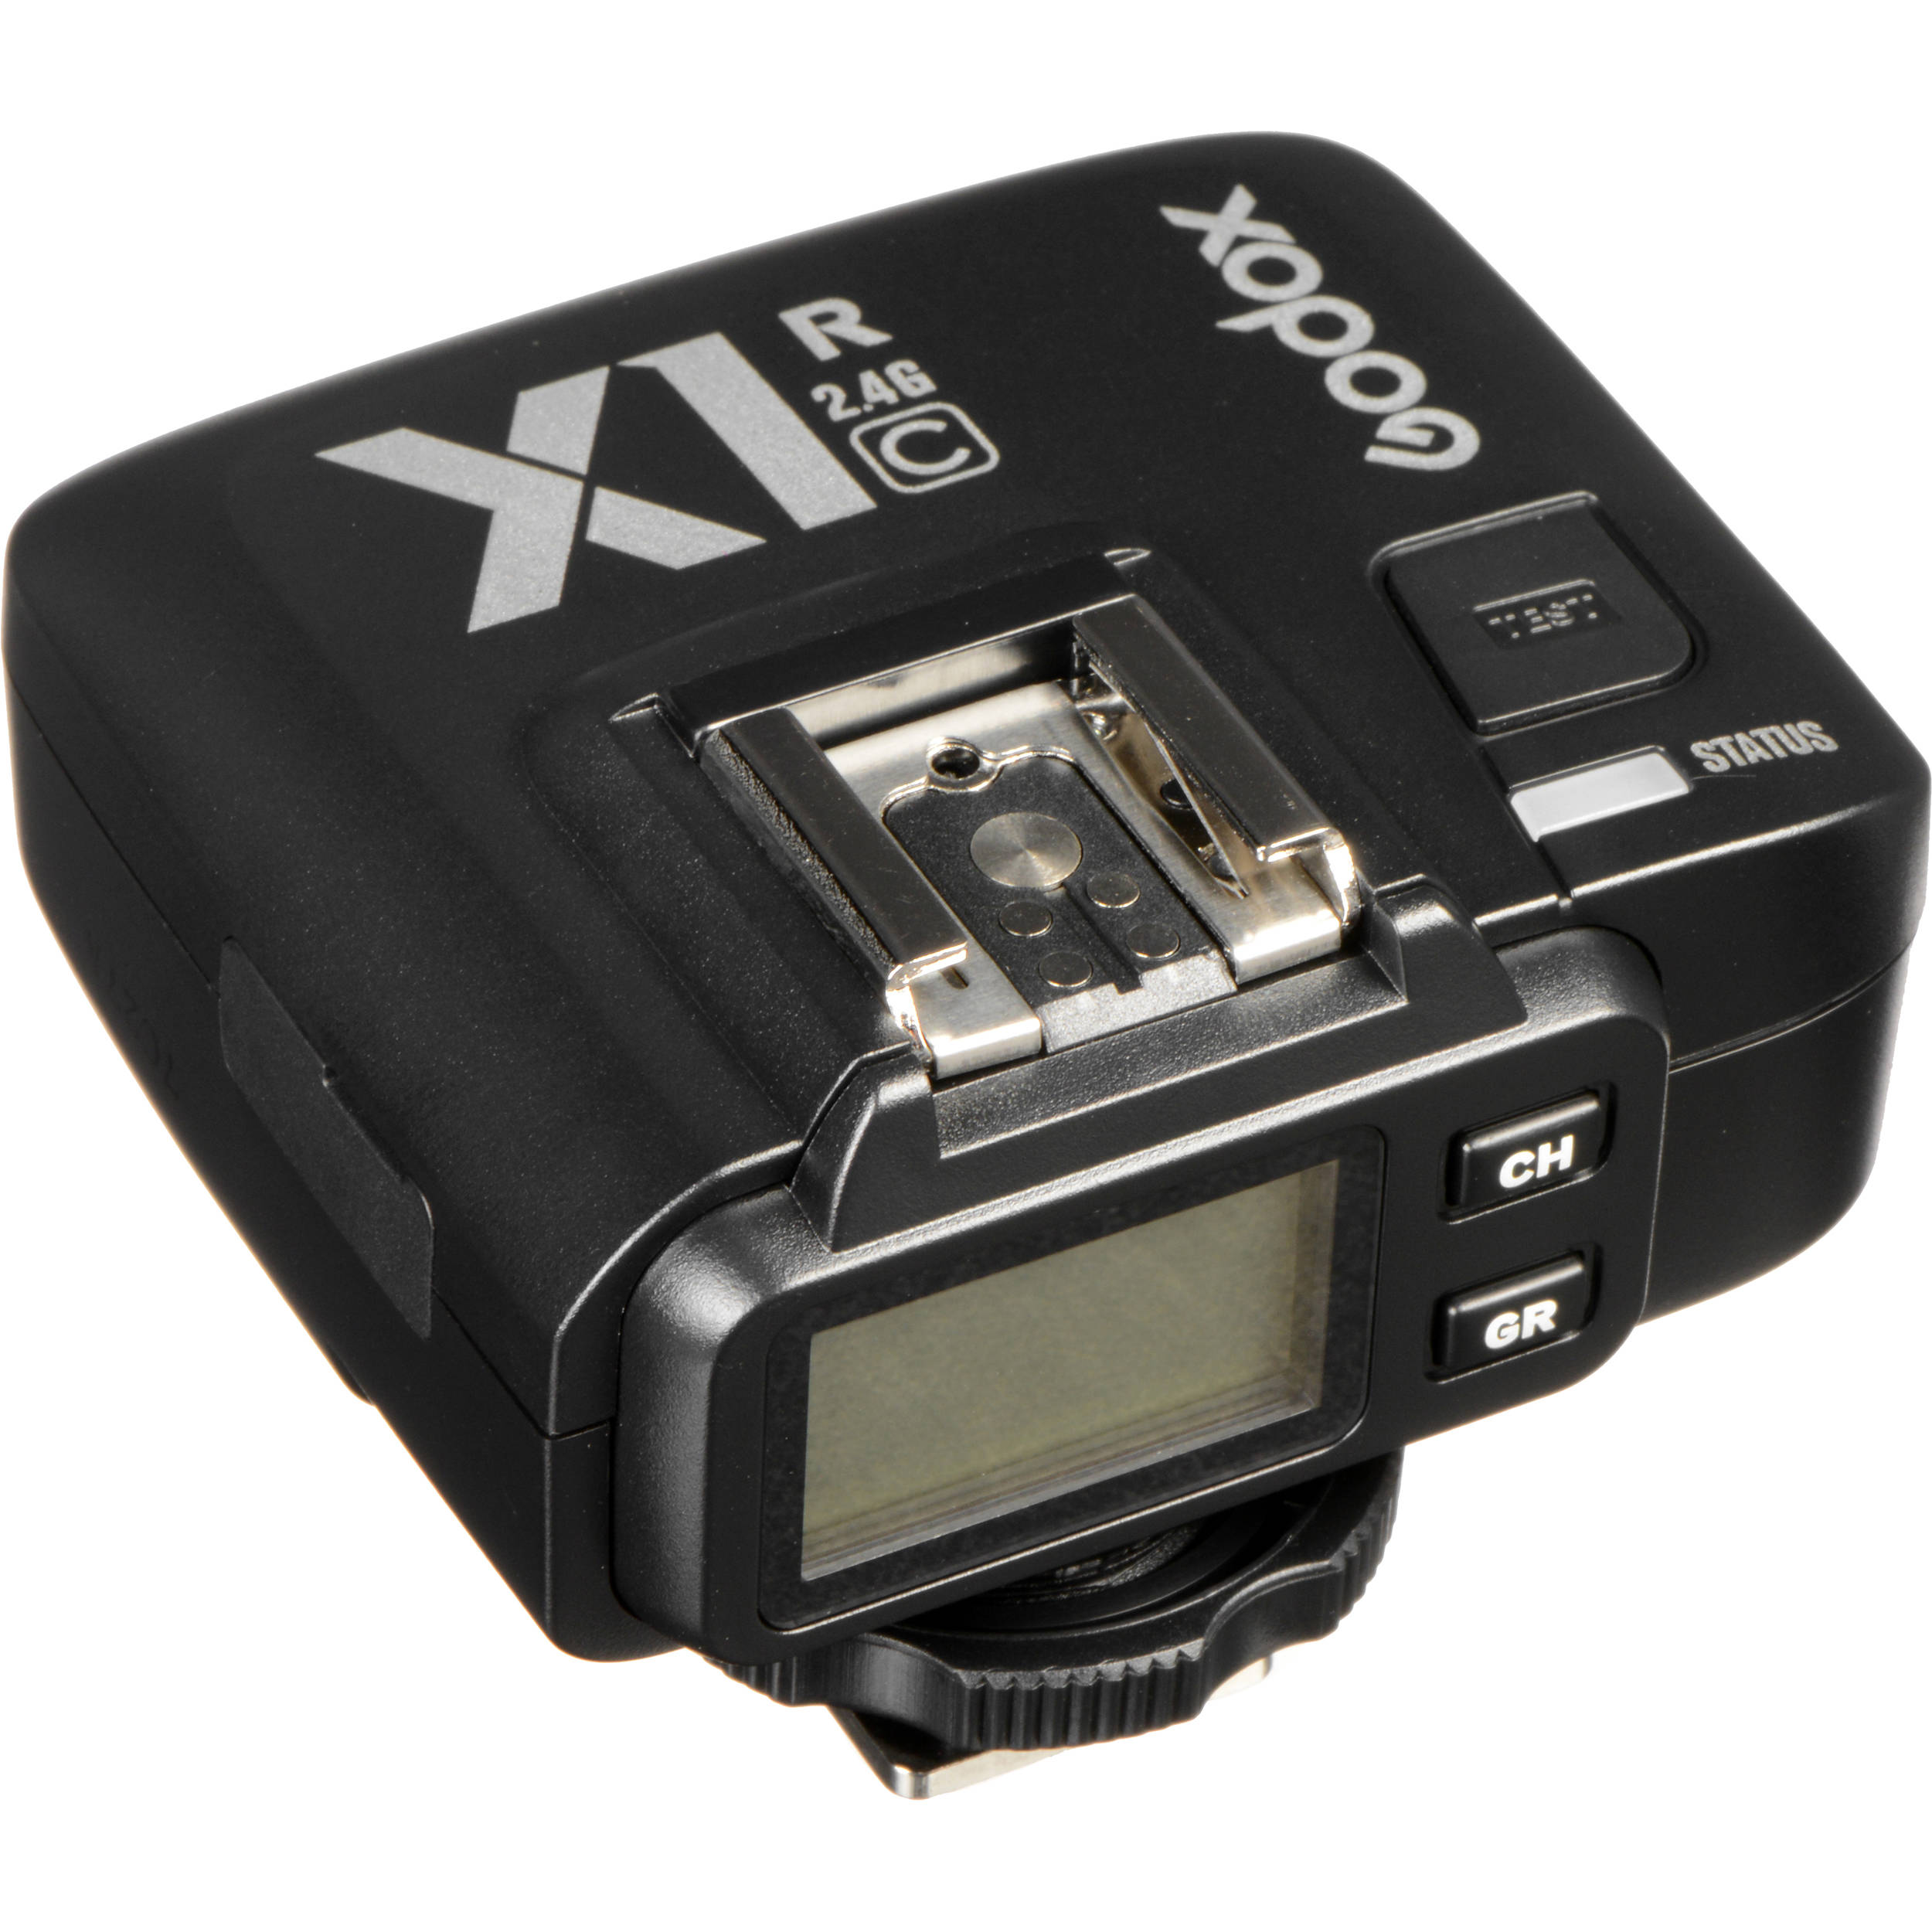 Godox X1r C Ttl Wireless Flash Trigger Receiver For Canon X1r C